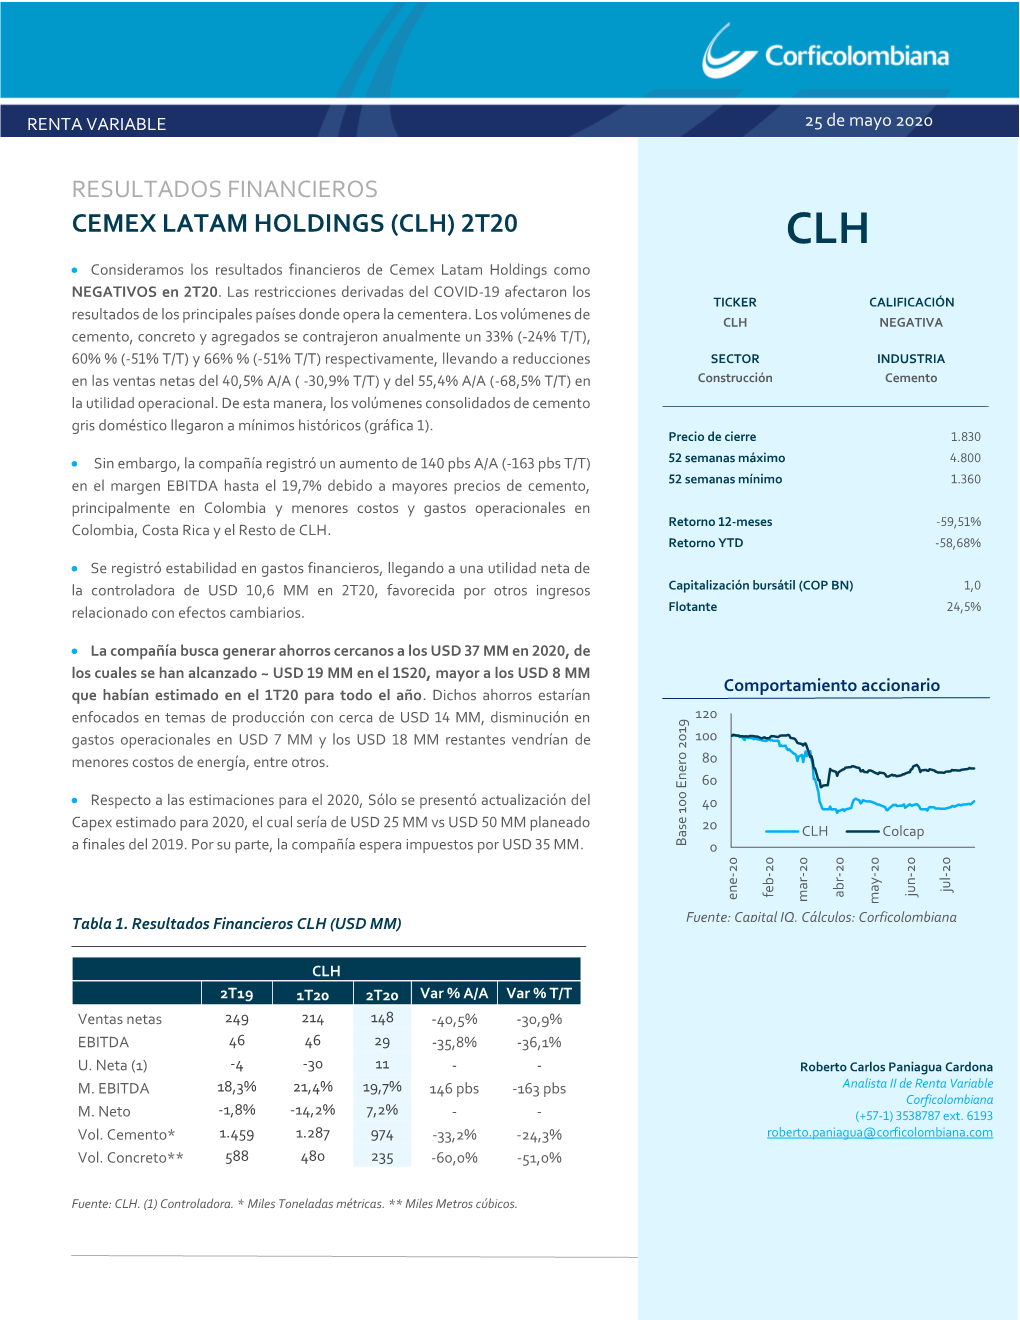 CEMEX LATAM HOLDINGS (CLH) 2T20 CLH • Consideramos Los Resultados Financieros De Cemex Latam Holdings Como